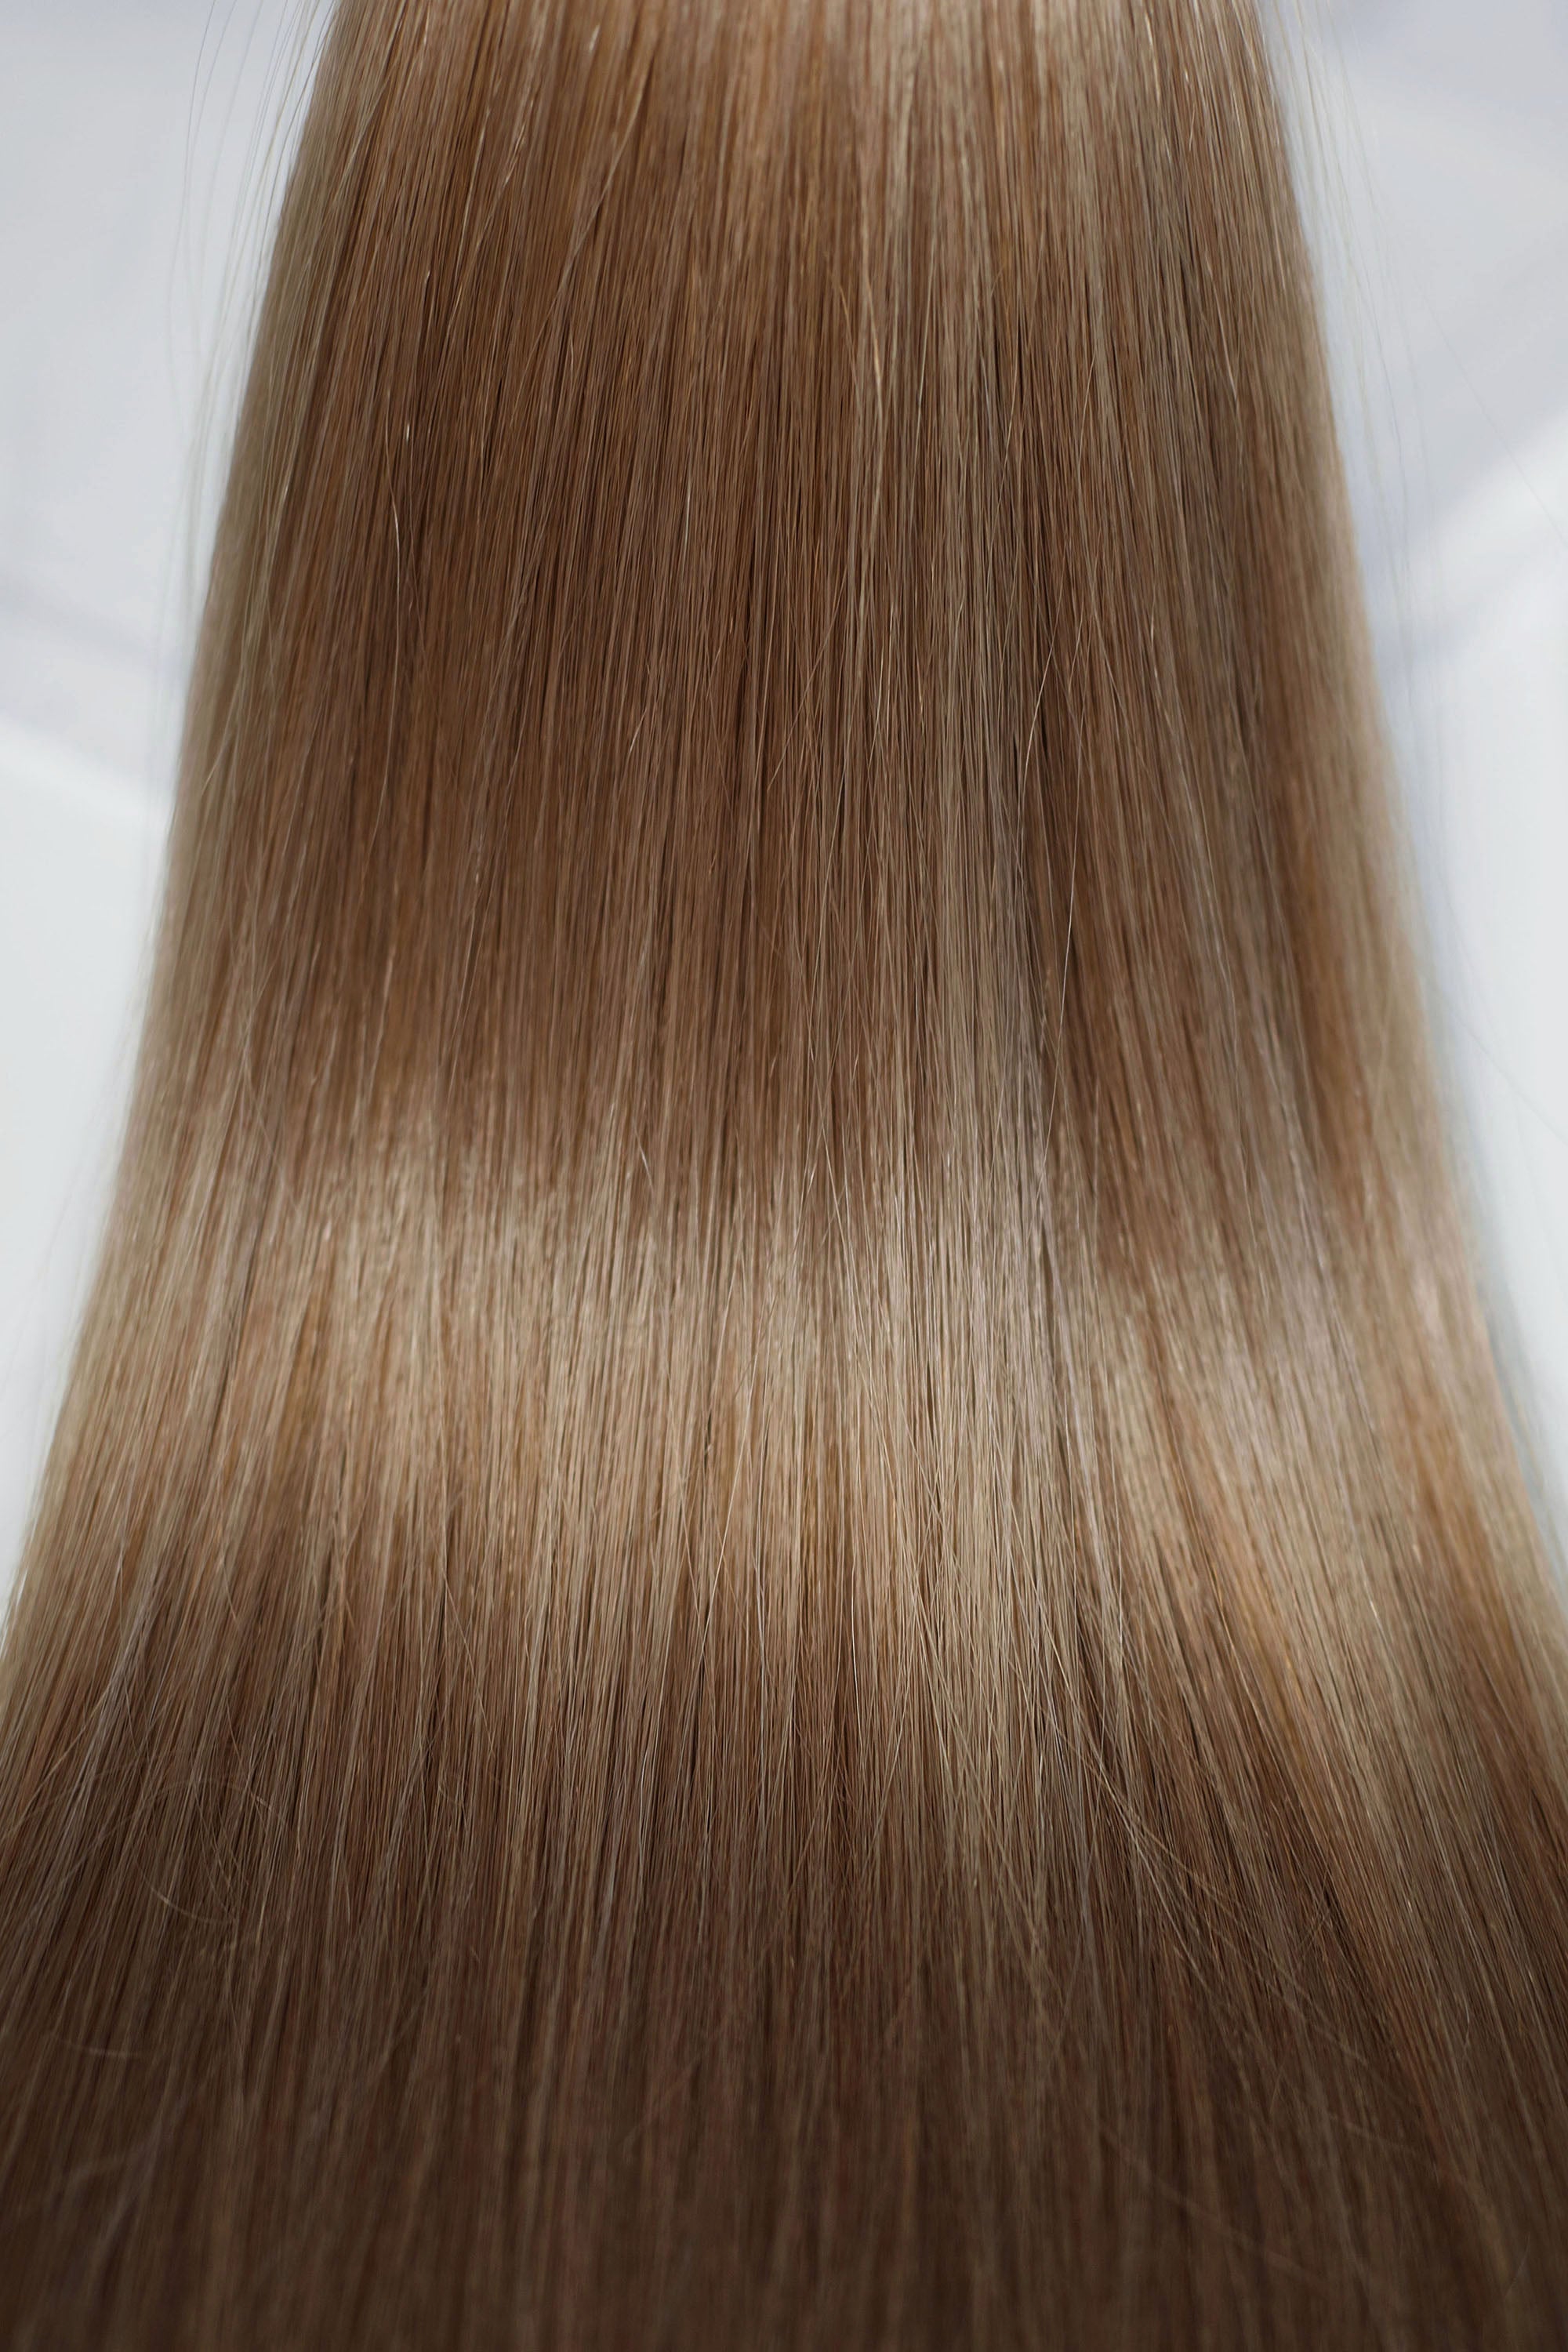 Behair professional Keratin Tip "Premium" 28" (70cm) Natural Straight Light Ash Brown #10 - 25g (1g each pcs) hair extensions